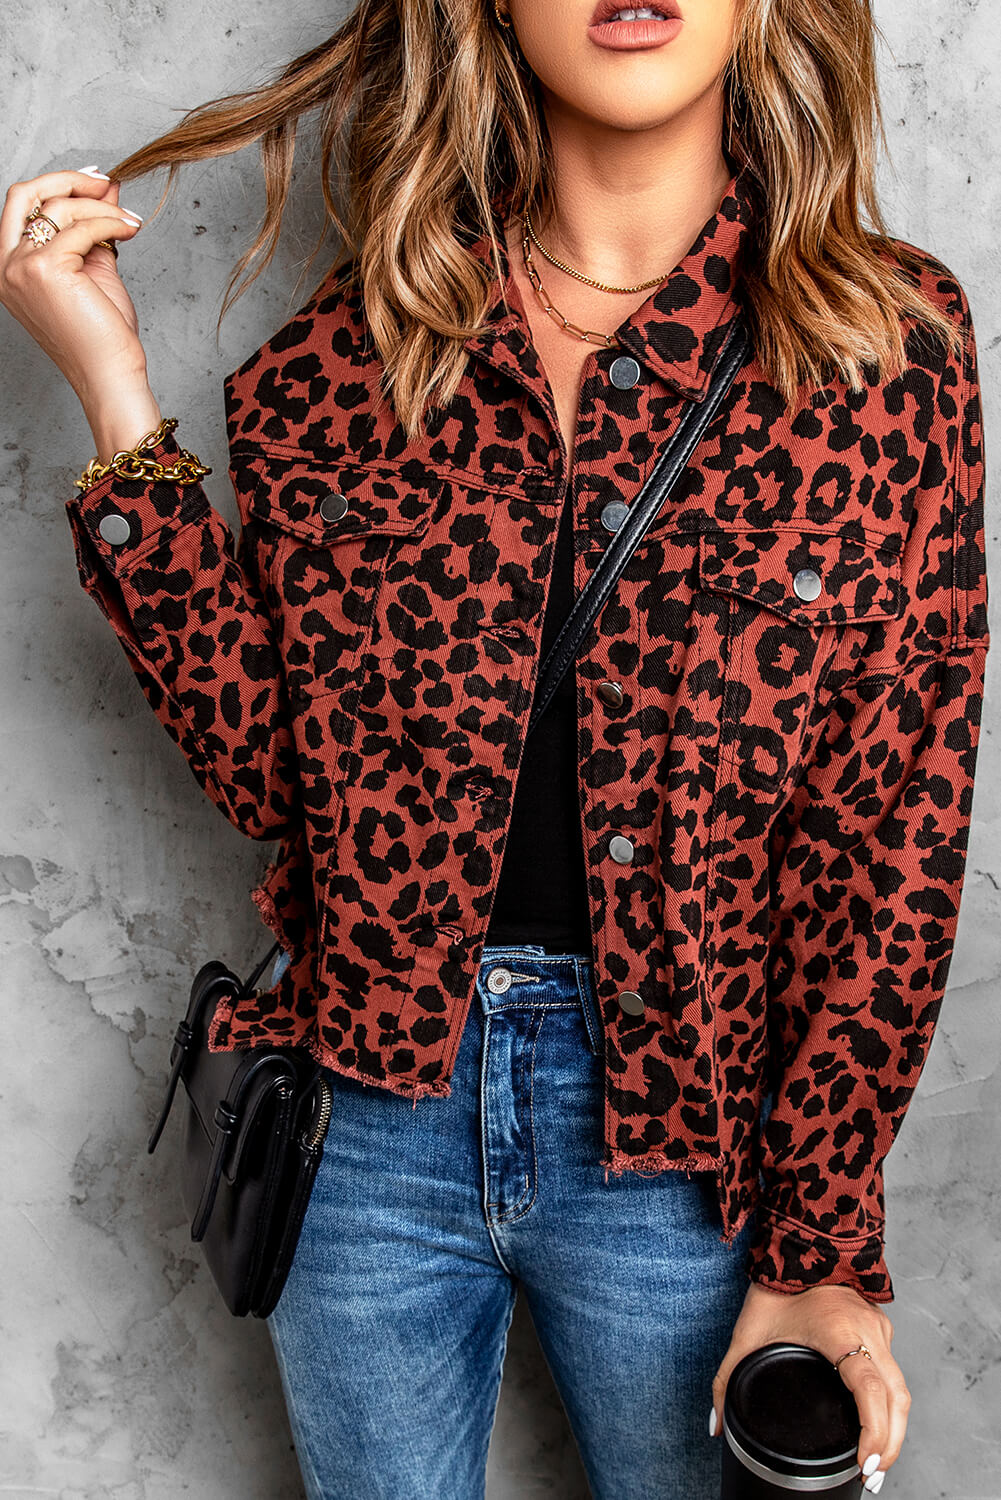 leopard-print denim jacket | Waxman Brothers | Eraldo.com